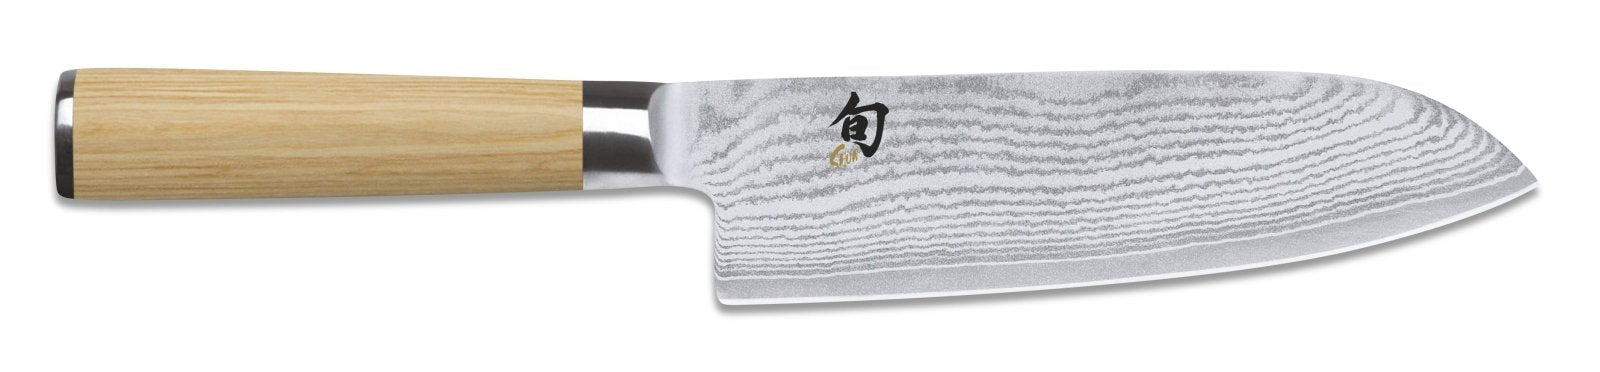 KAI Shun White 18cm Santoku Knife - KAI-DM-0702W - The Cotswold Knife Company